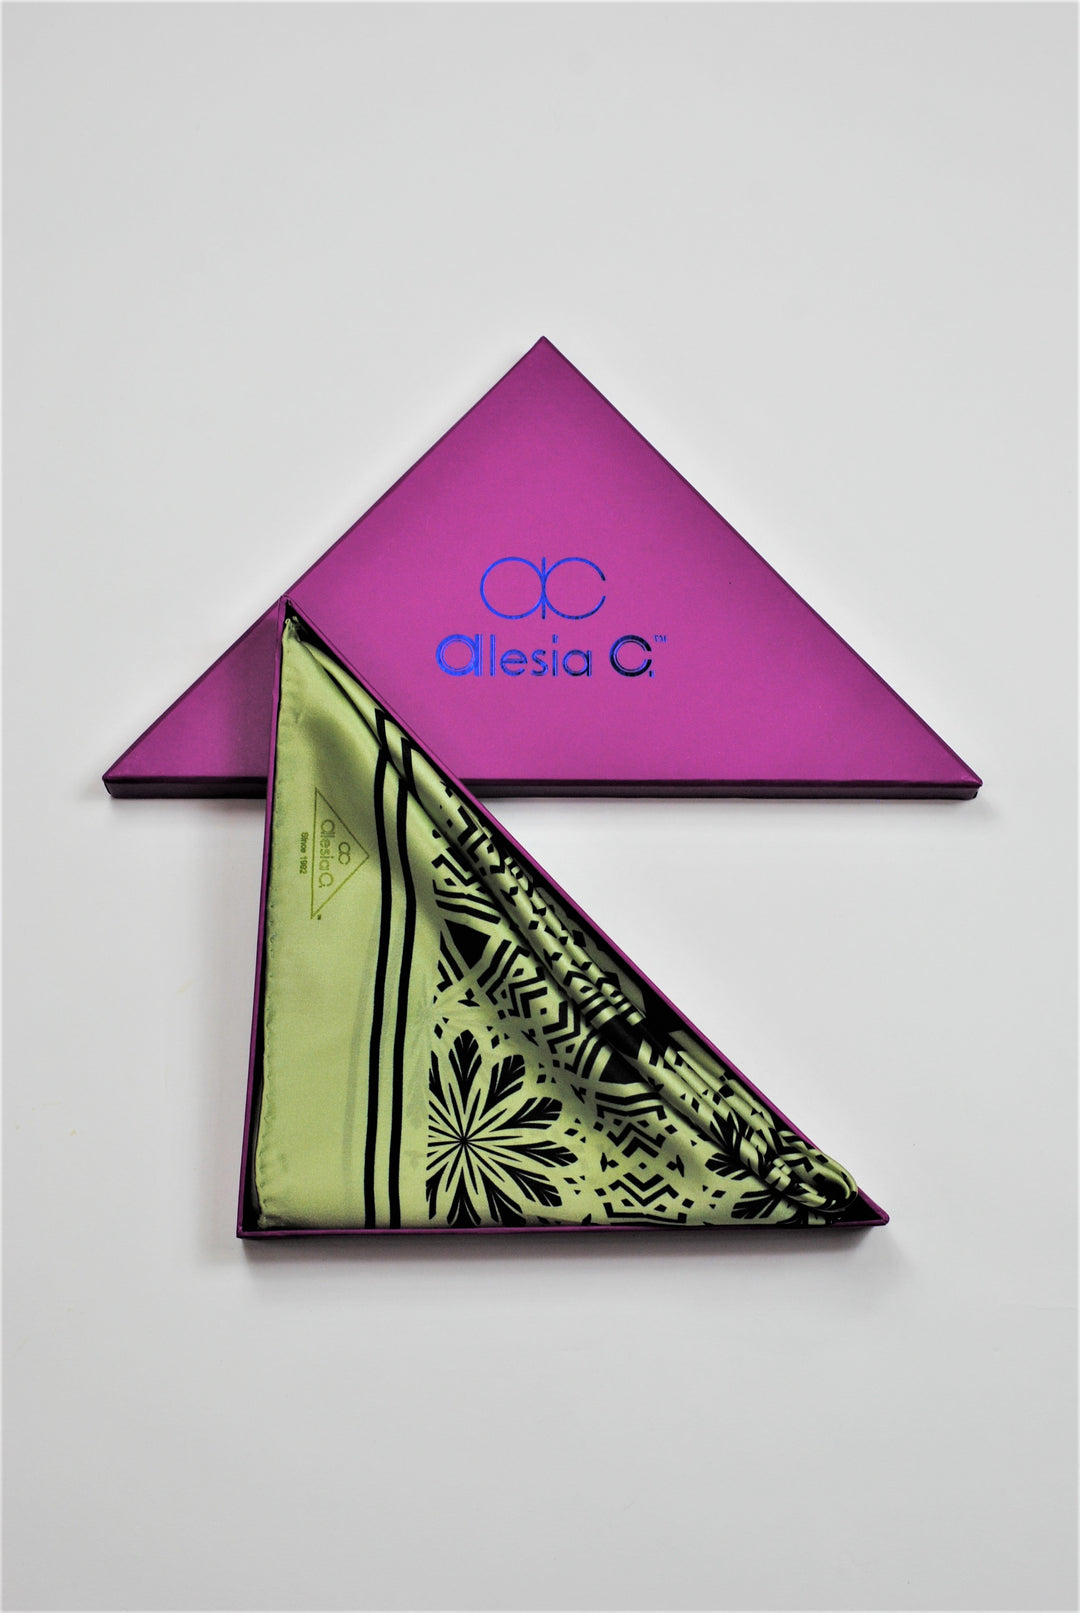 SERENITY Mandala Art Pure Silk Charmeuse Scarf in Light Green Sage Black Alesia Chaika Alesia C. designer scarf in the signature triangle purple gift box